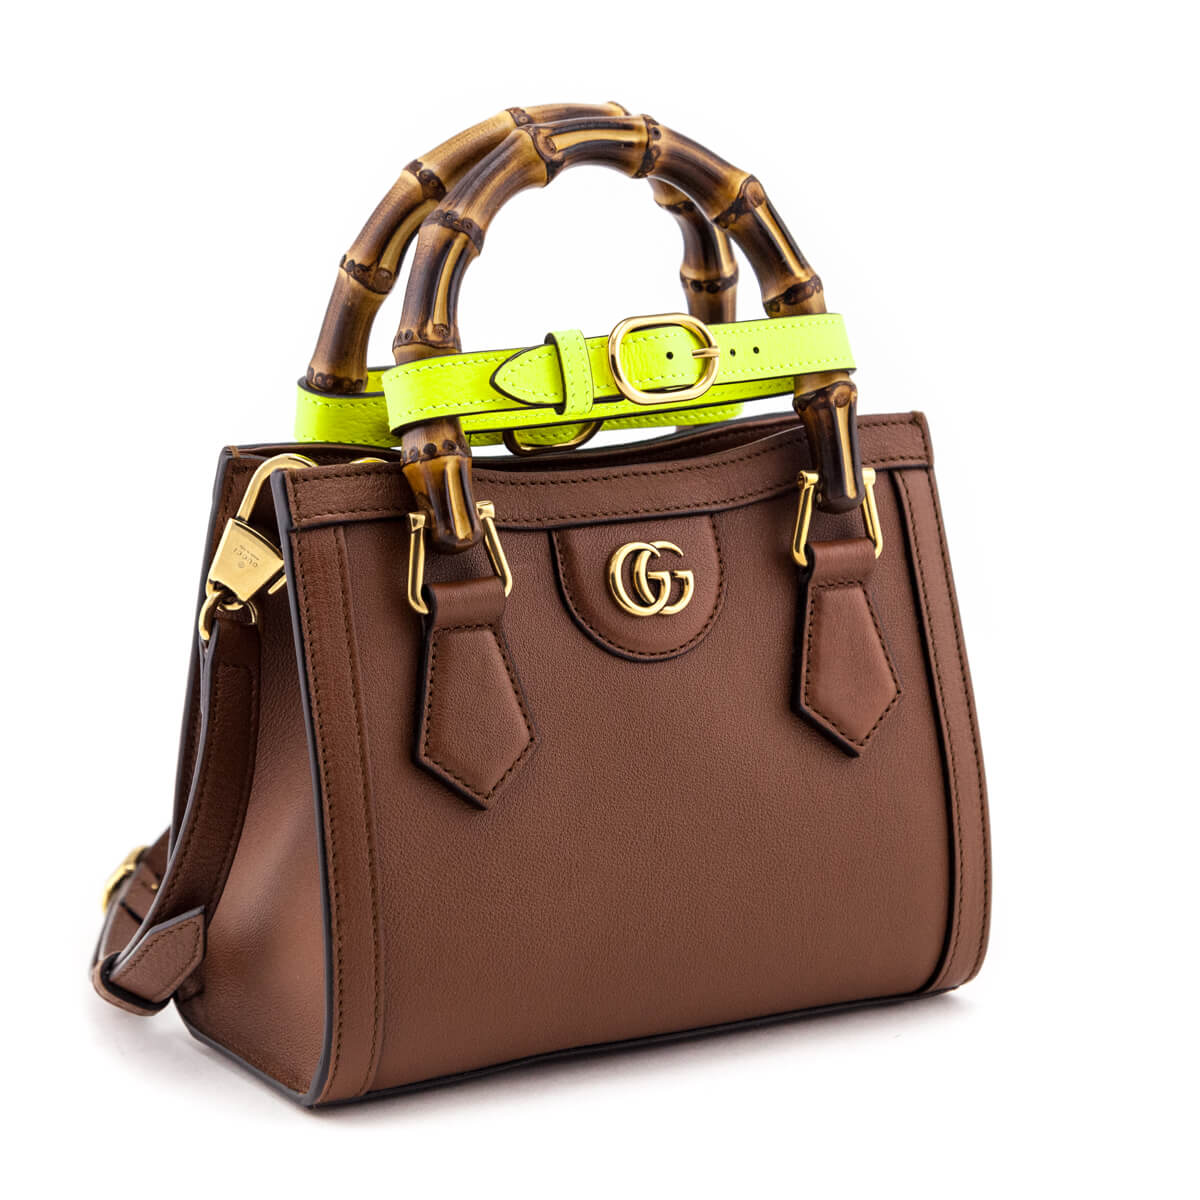 Gucci Cuir & Yellow Fluo Wonka Grain Calfskin Mini Diana Bag - Love that Bag etc - Preowned Authentic Designer Handbags & Preloved Fashions